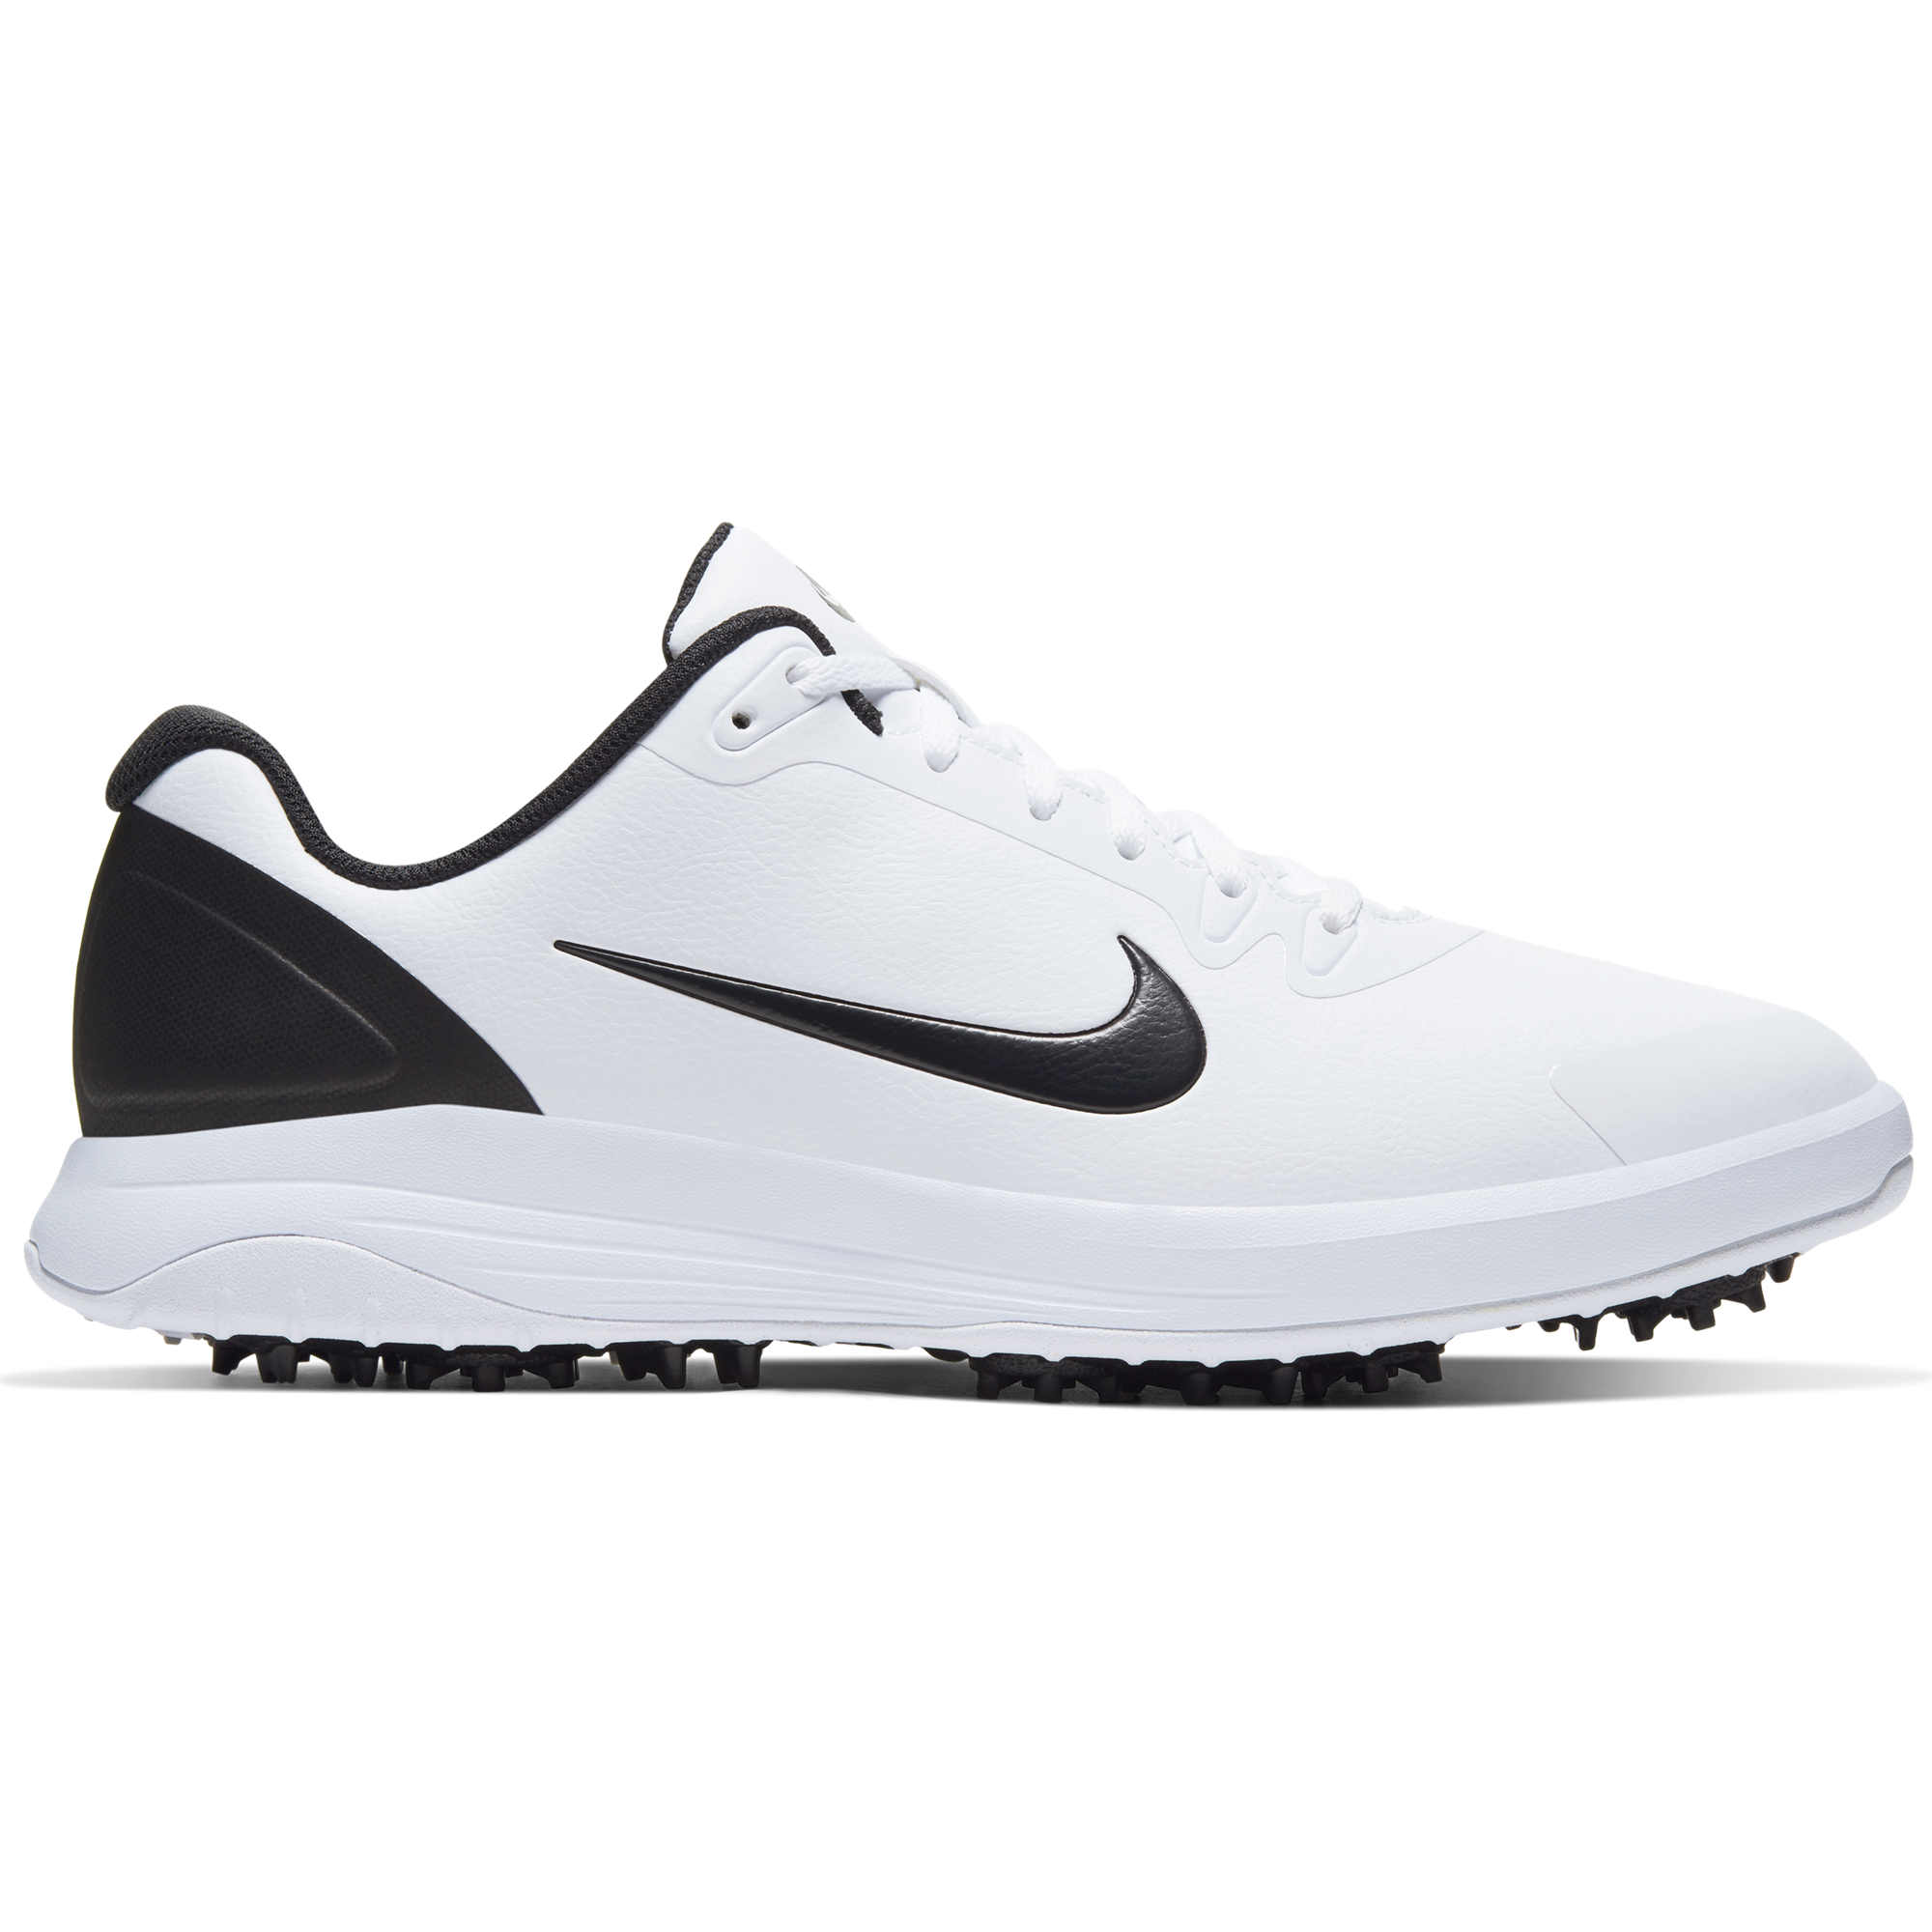 Infinity G Spikeless Golf Shoe - White/Black